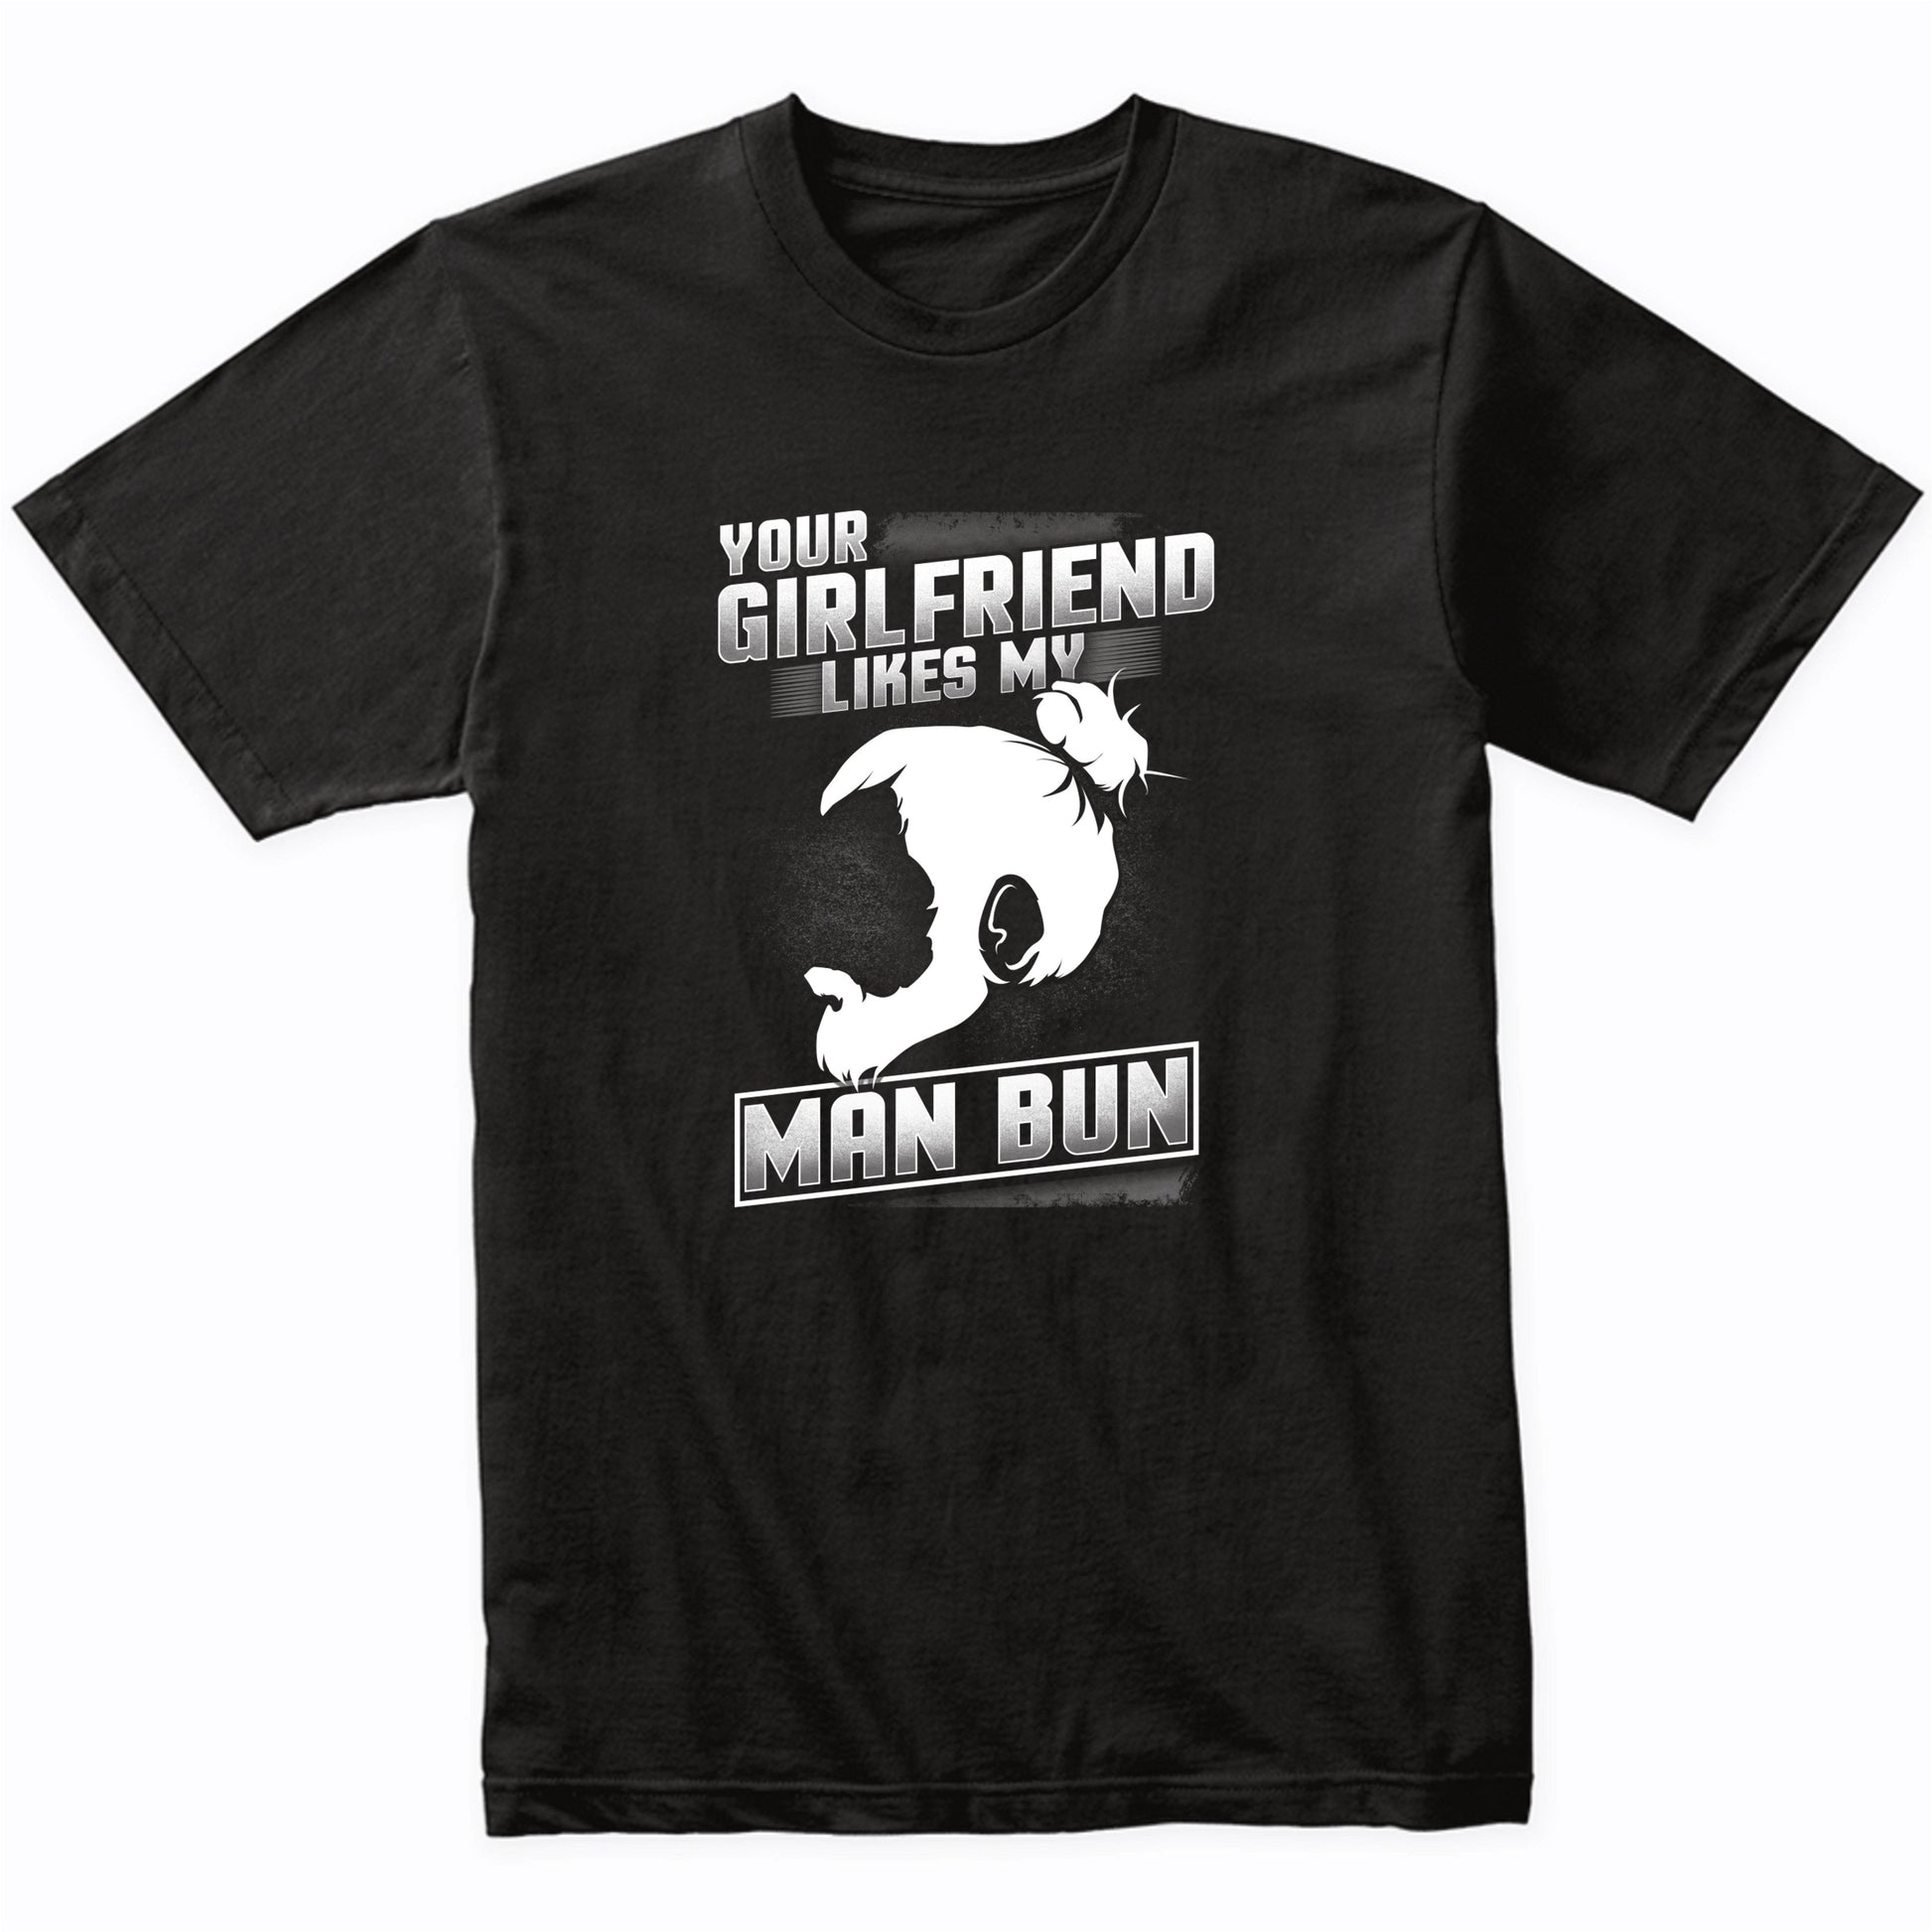 Man Bun Shirt - Your Girlfriend Likes My Man Bun Funny T-Shirt